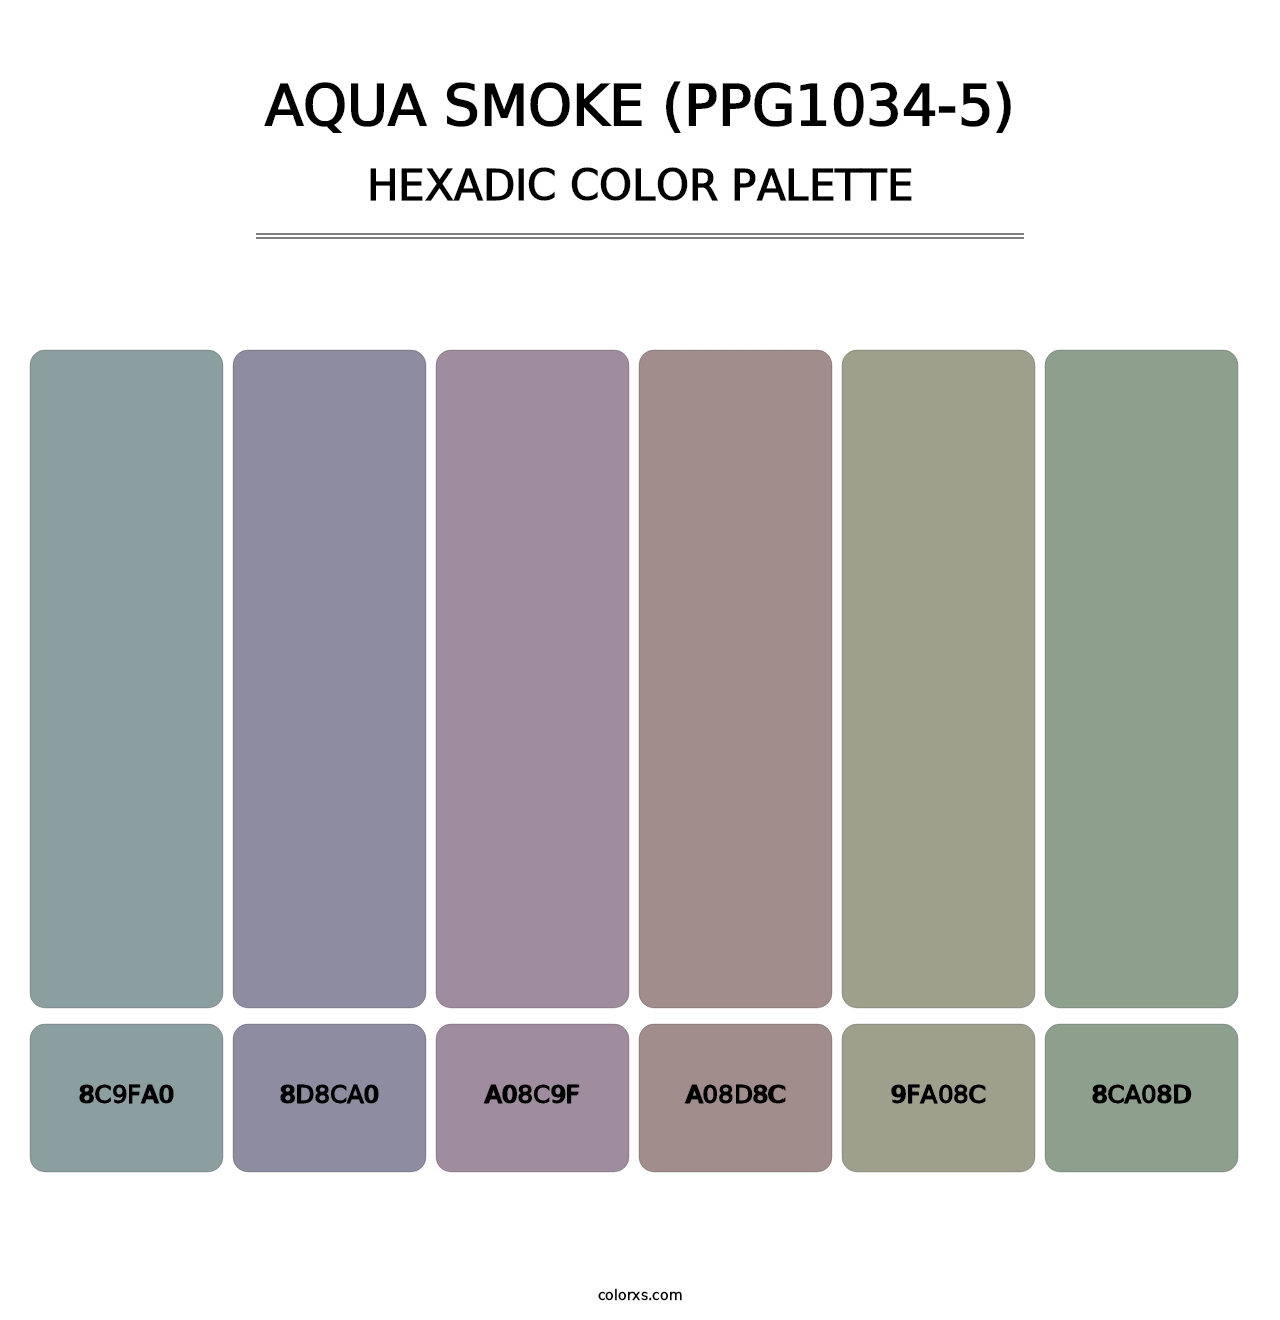 Aqua Smoke (PPG1034-5) - Hexadic Color Palette